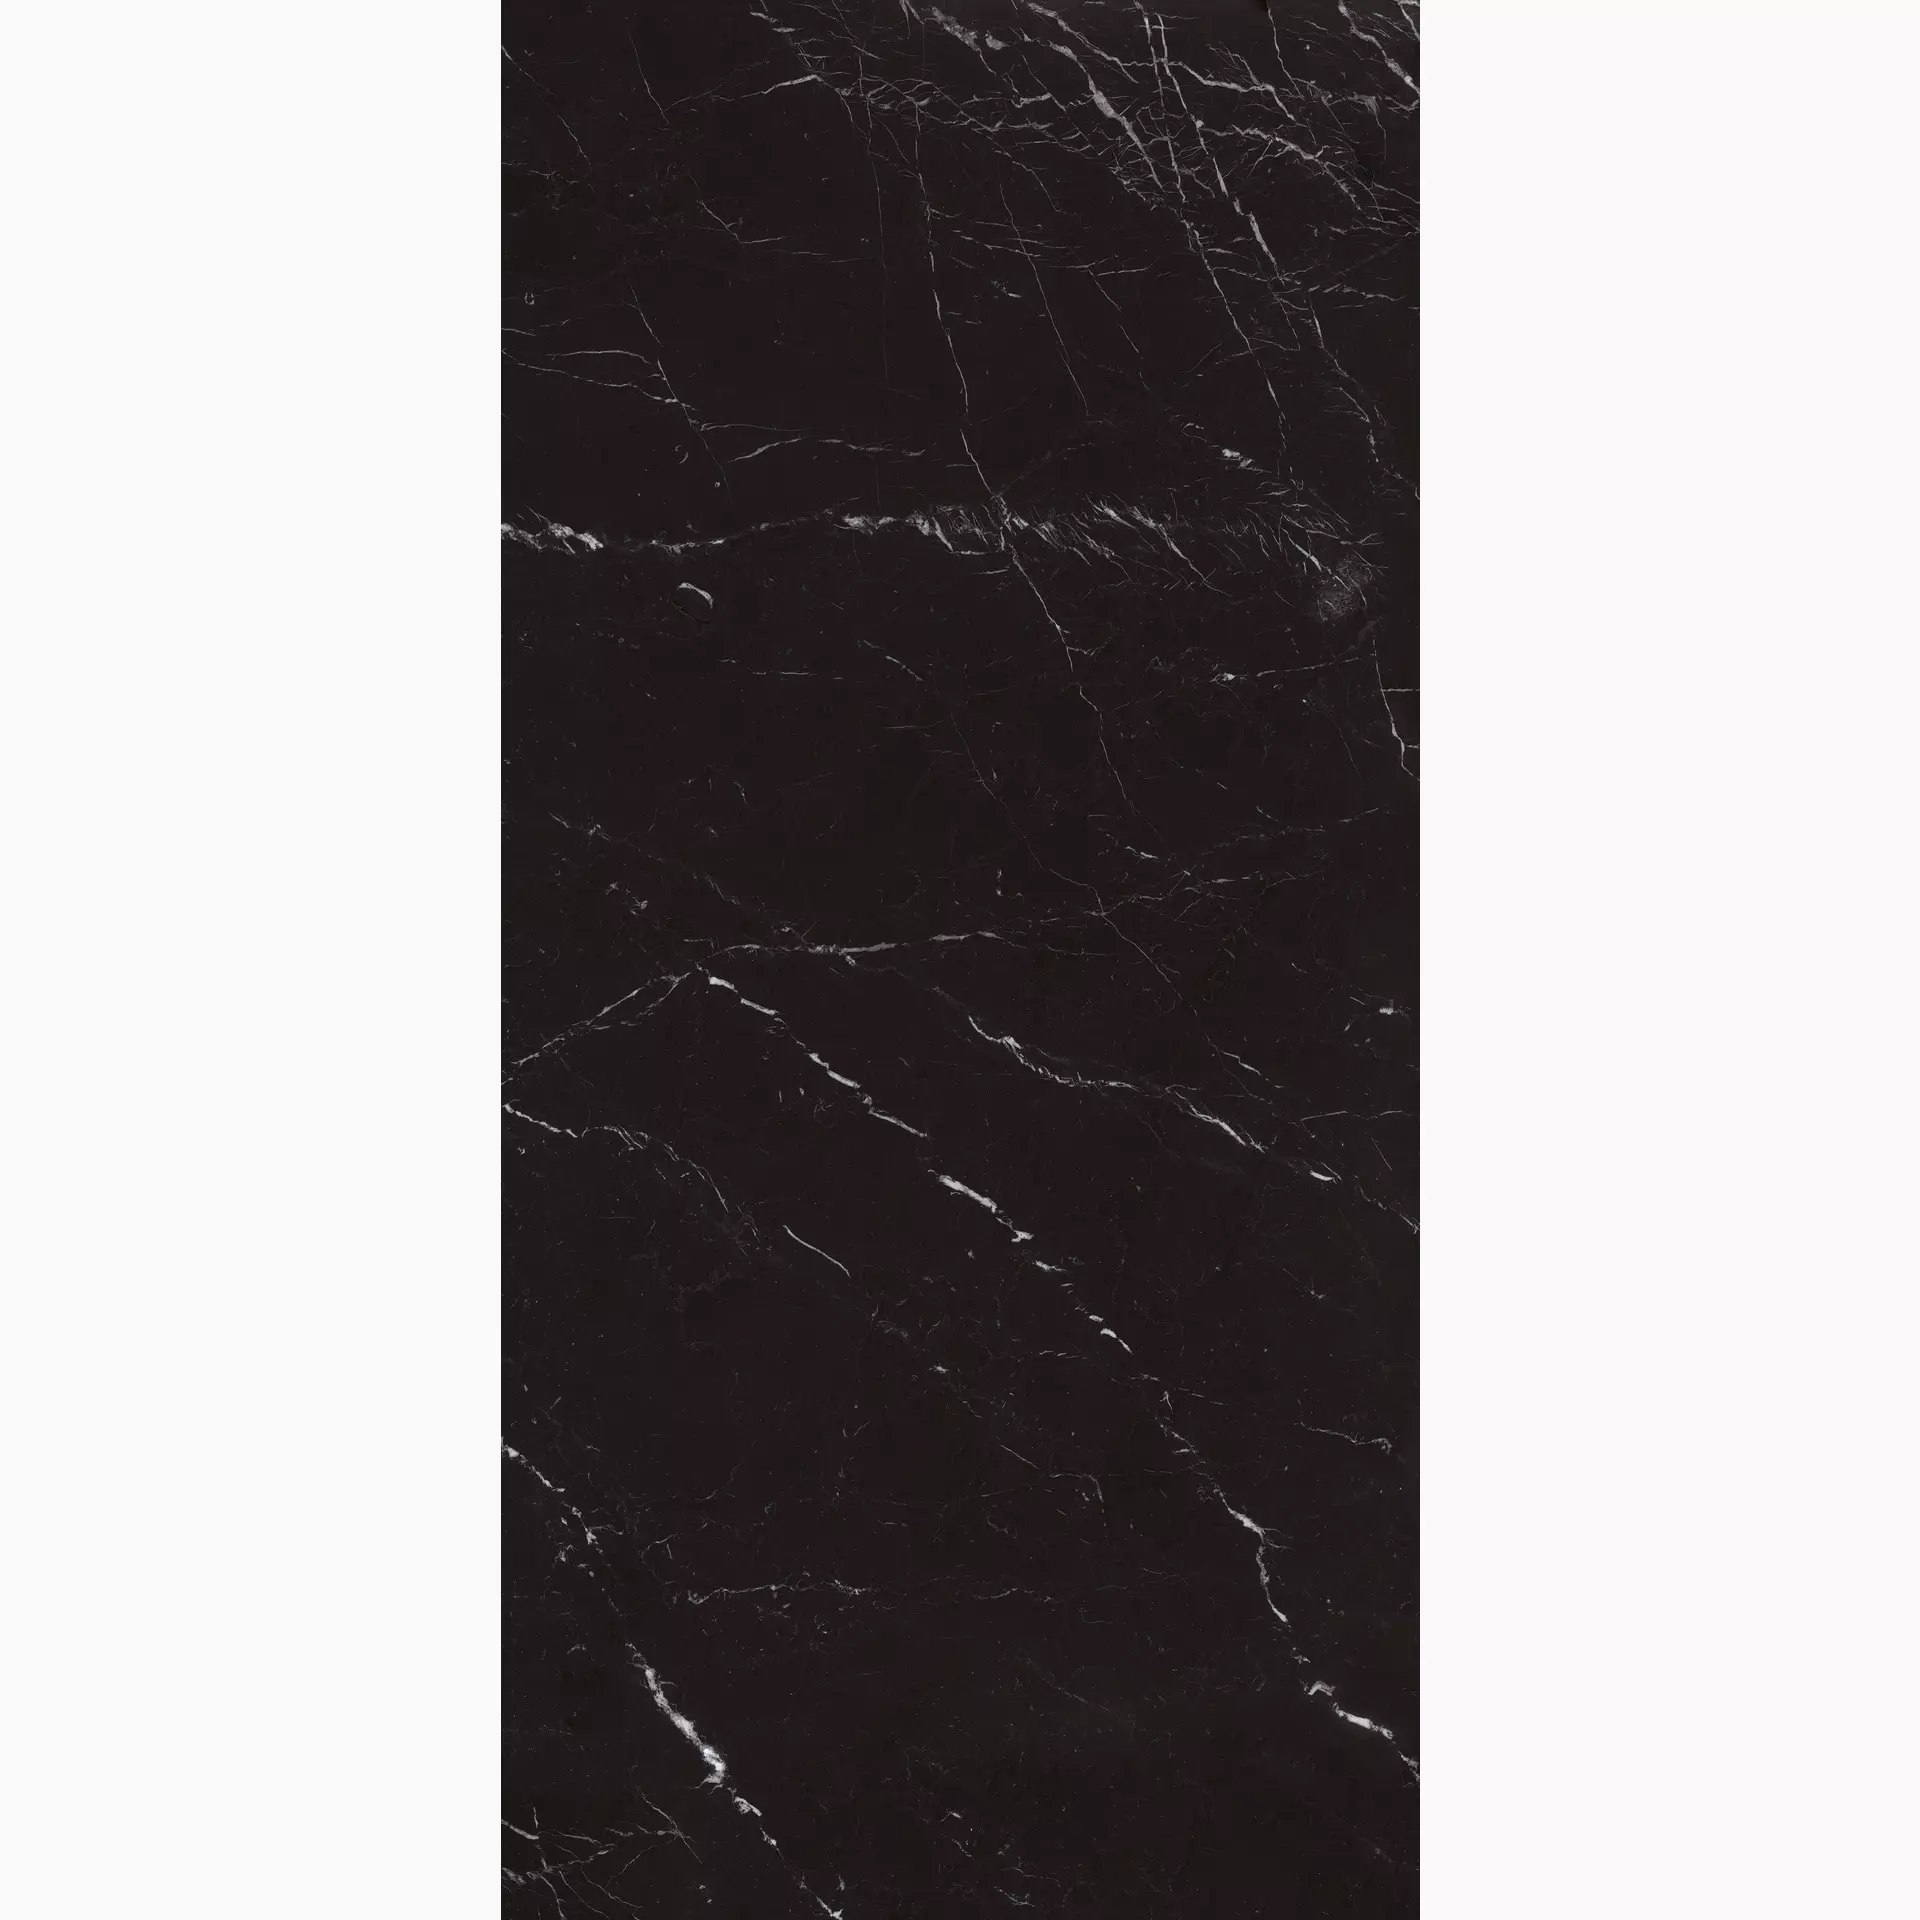 Marazzi Grande Marble Look Elegant Black Satinato M0Z5 160x320cm rectified 6mm